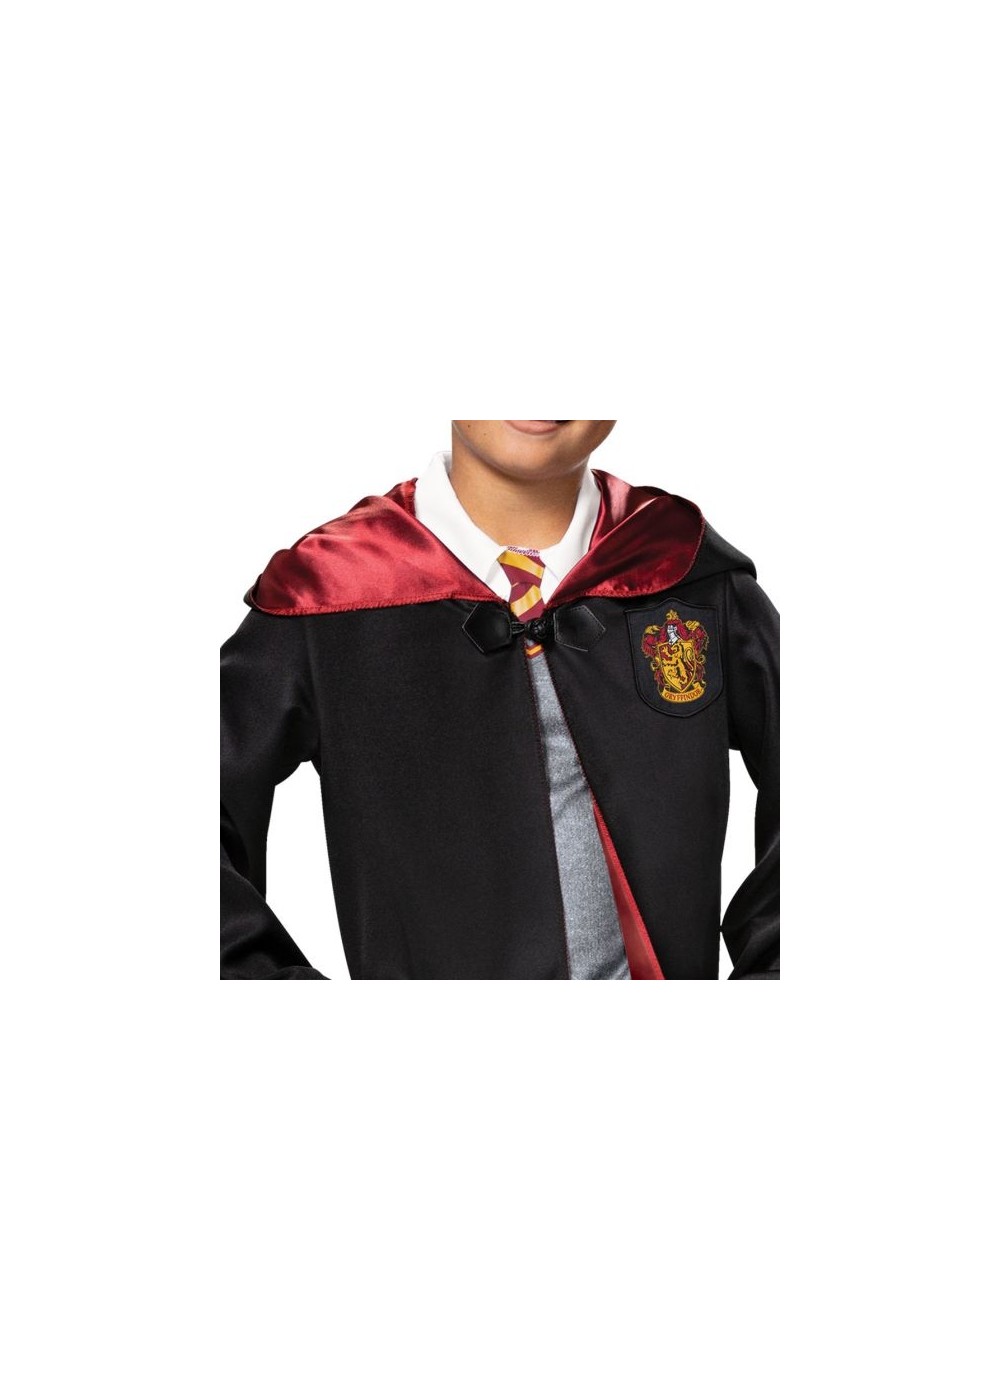 Boys Harry Potter Costume - Movie Costumes